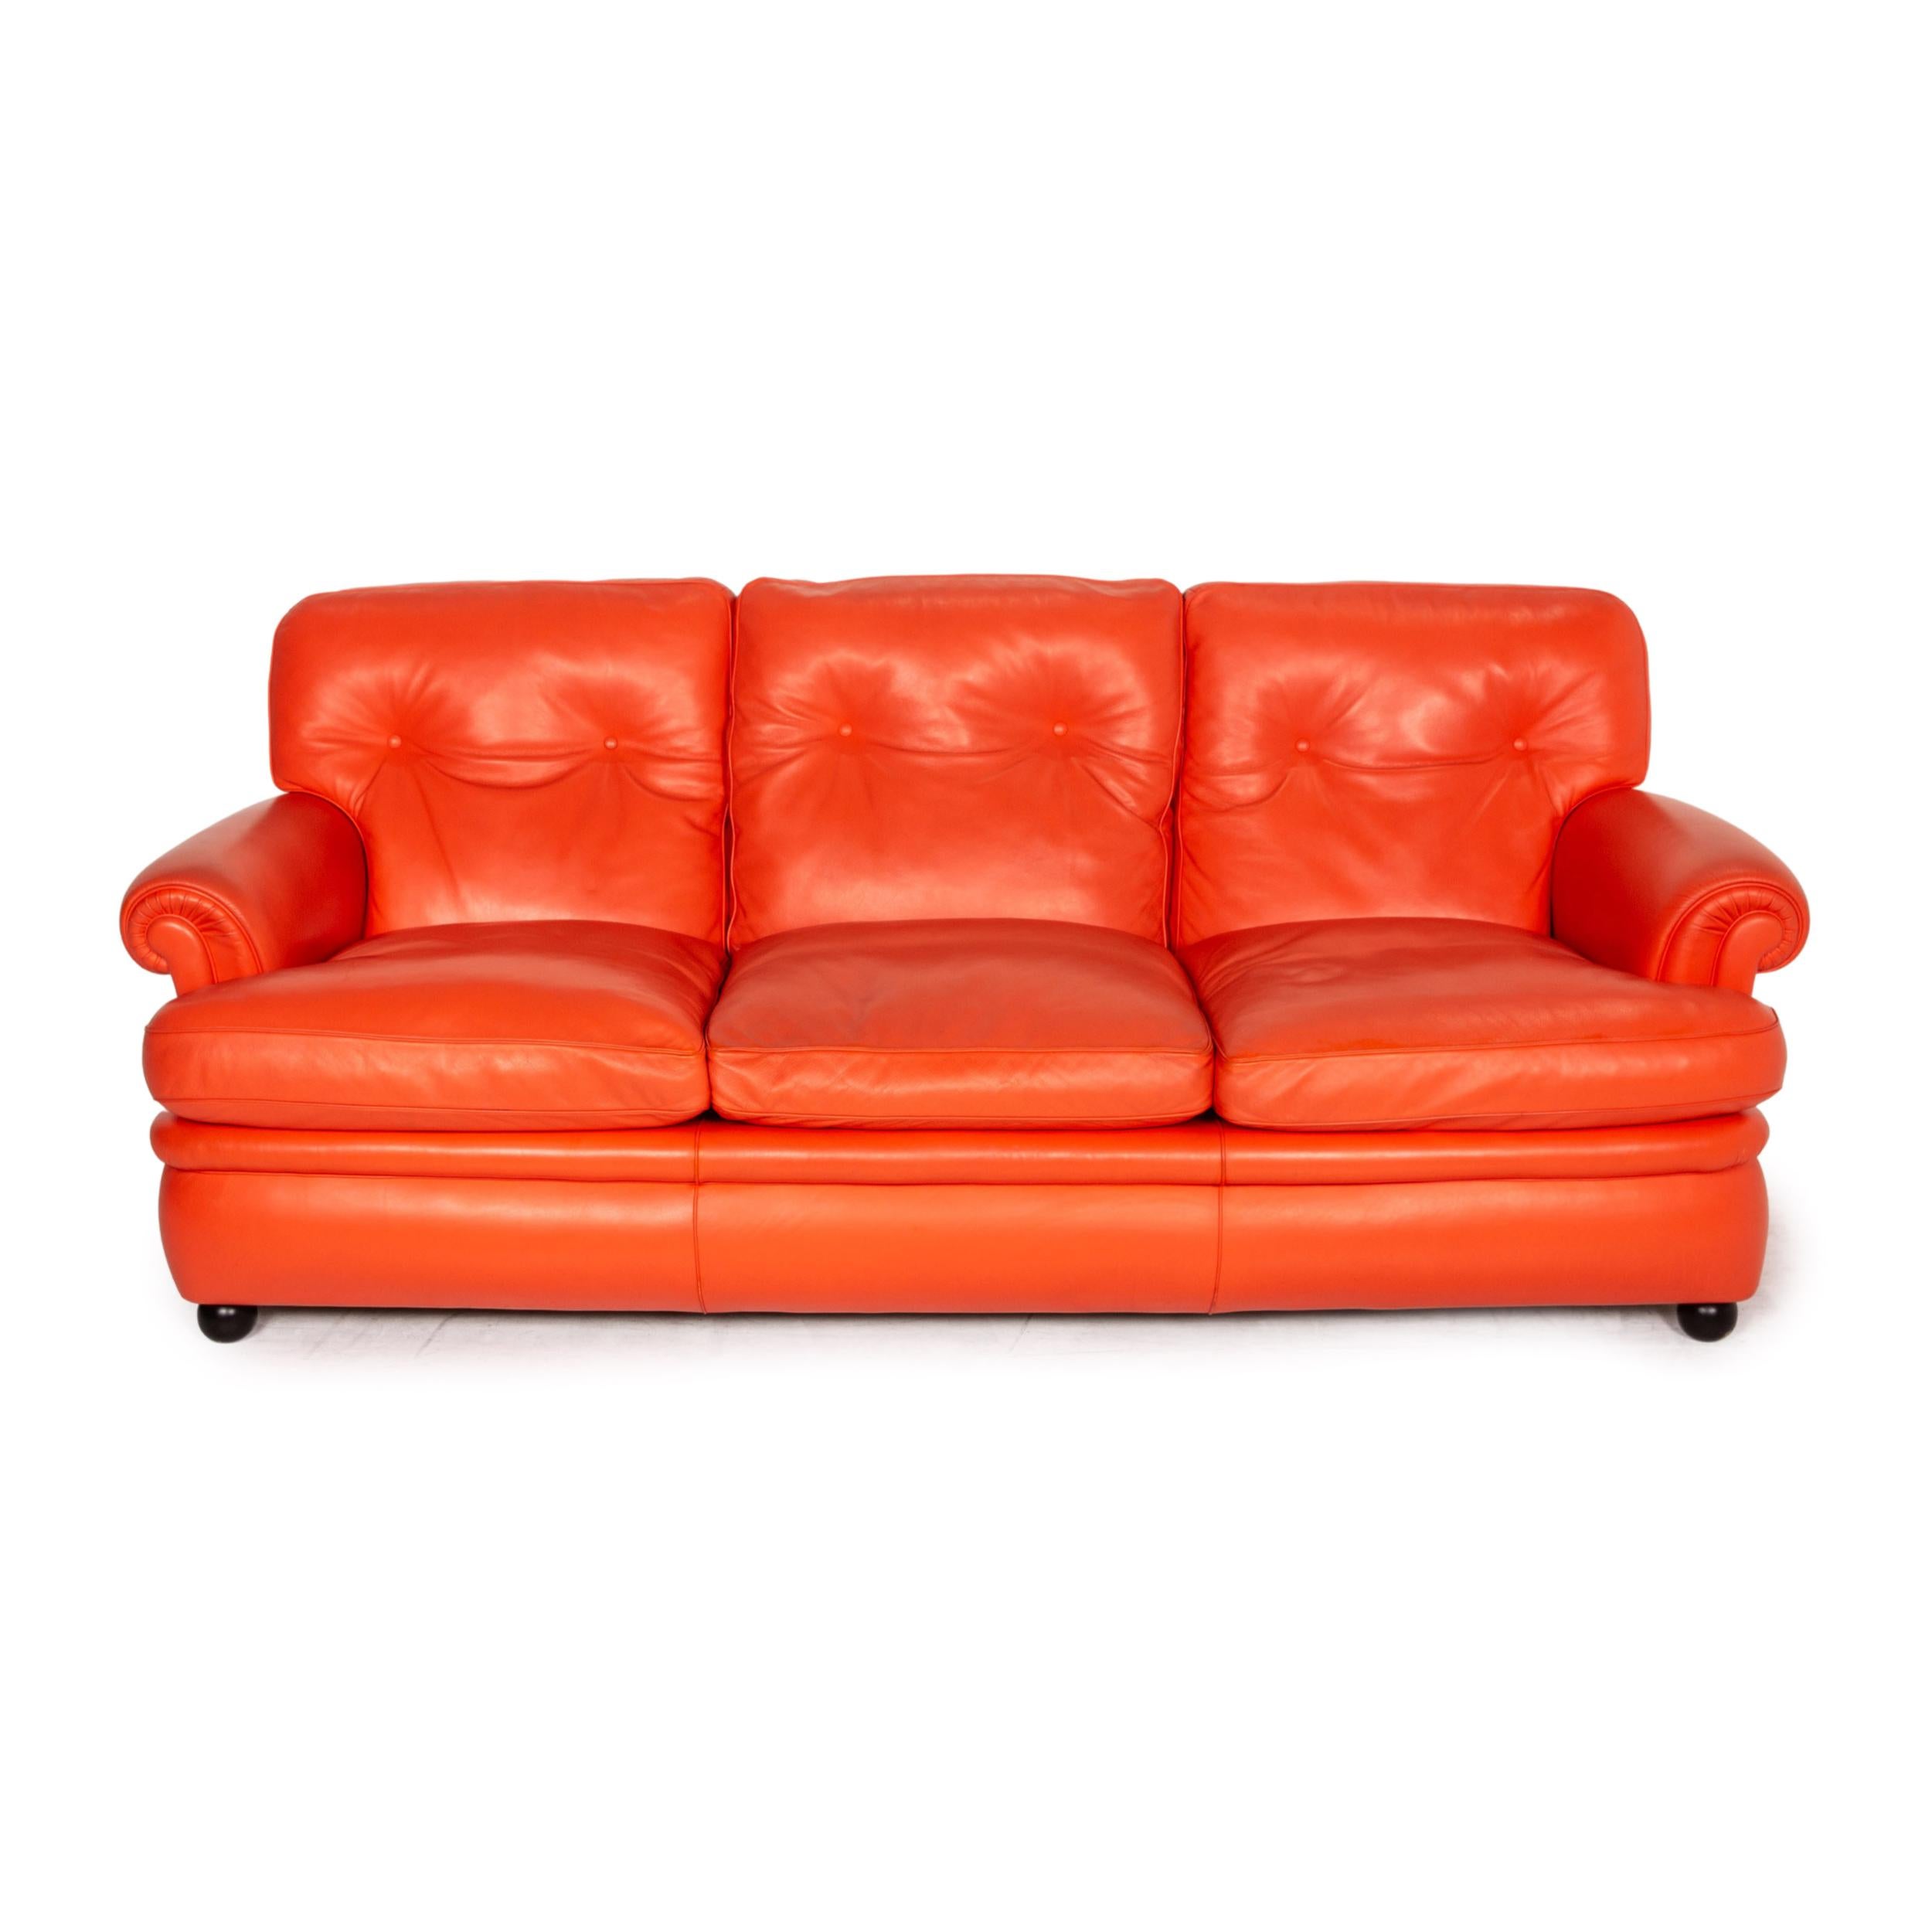 Poltrona Frau Dream on Leather Sofa Coral Orange Chesterfield Sofa Couch 2